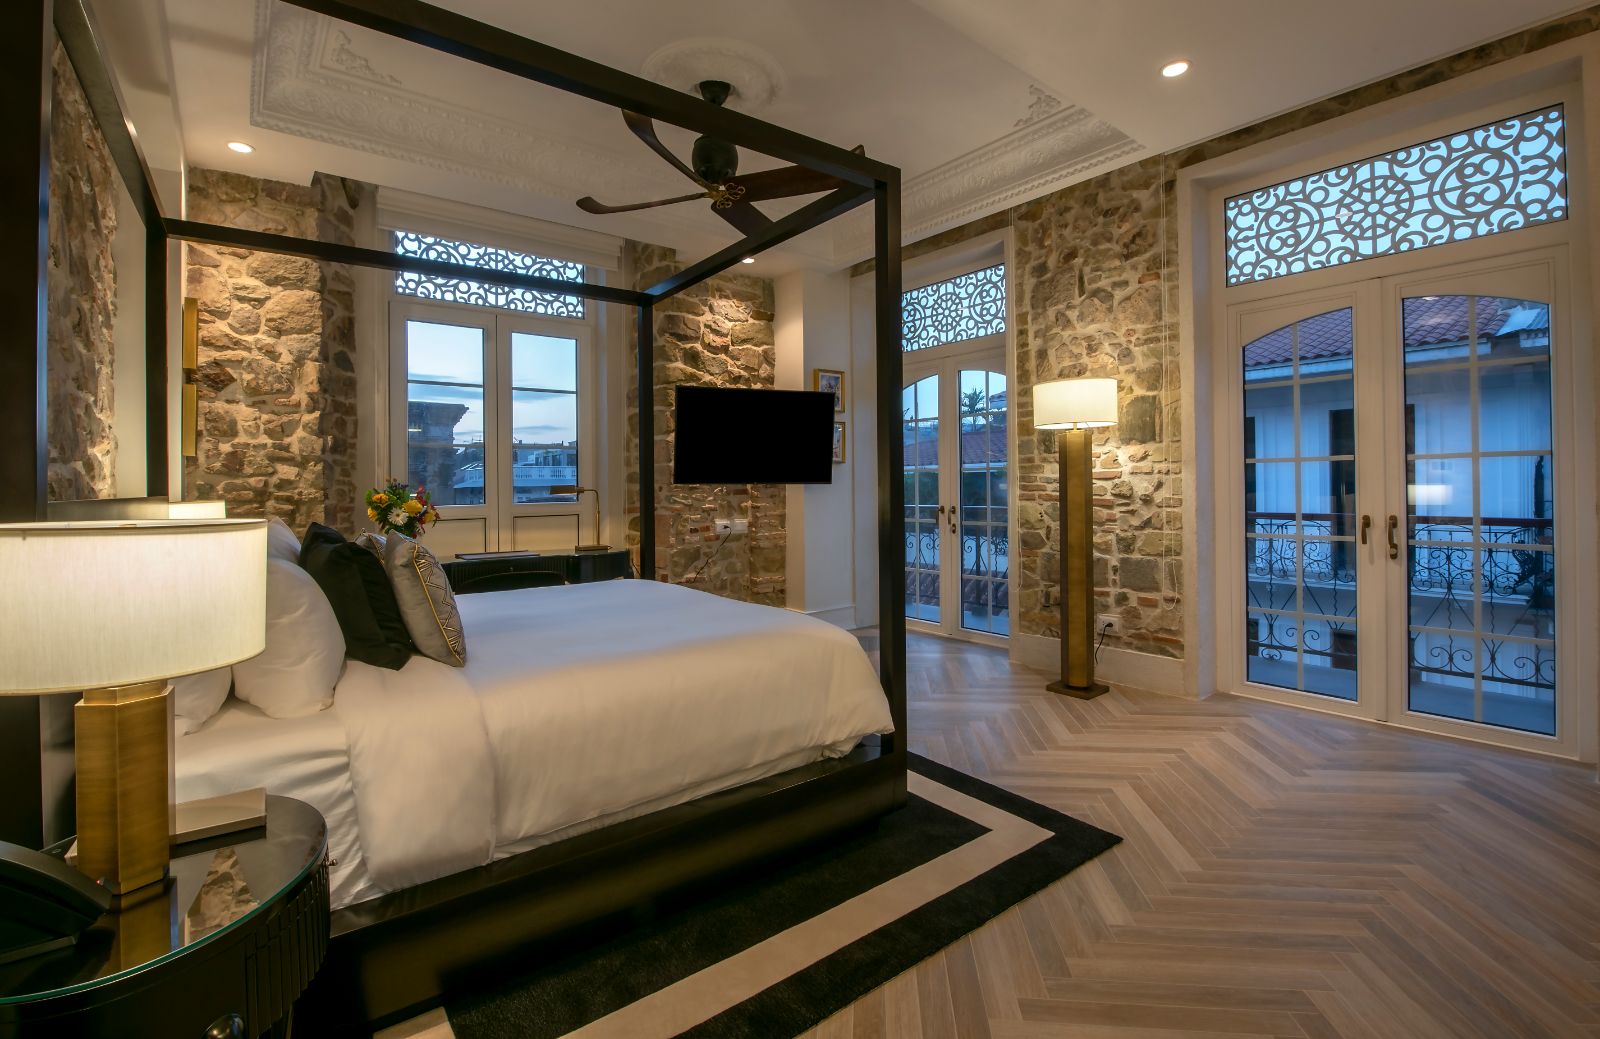 Junior suite bedroom at Hyatt's Hotel La Compania in Panama City